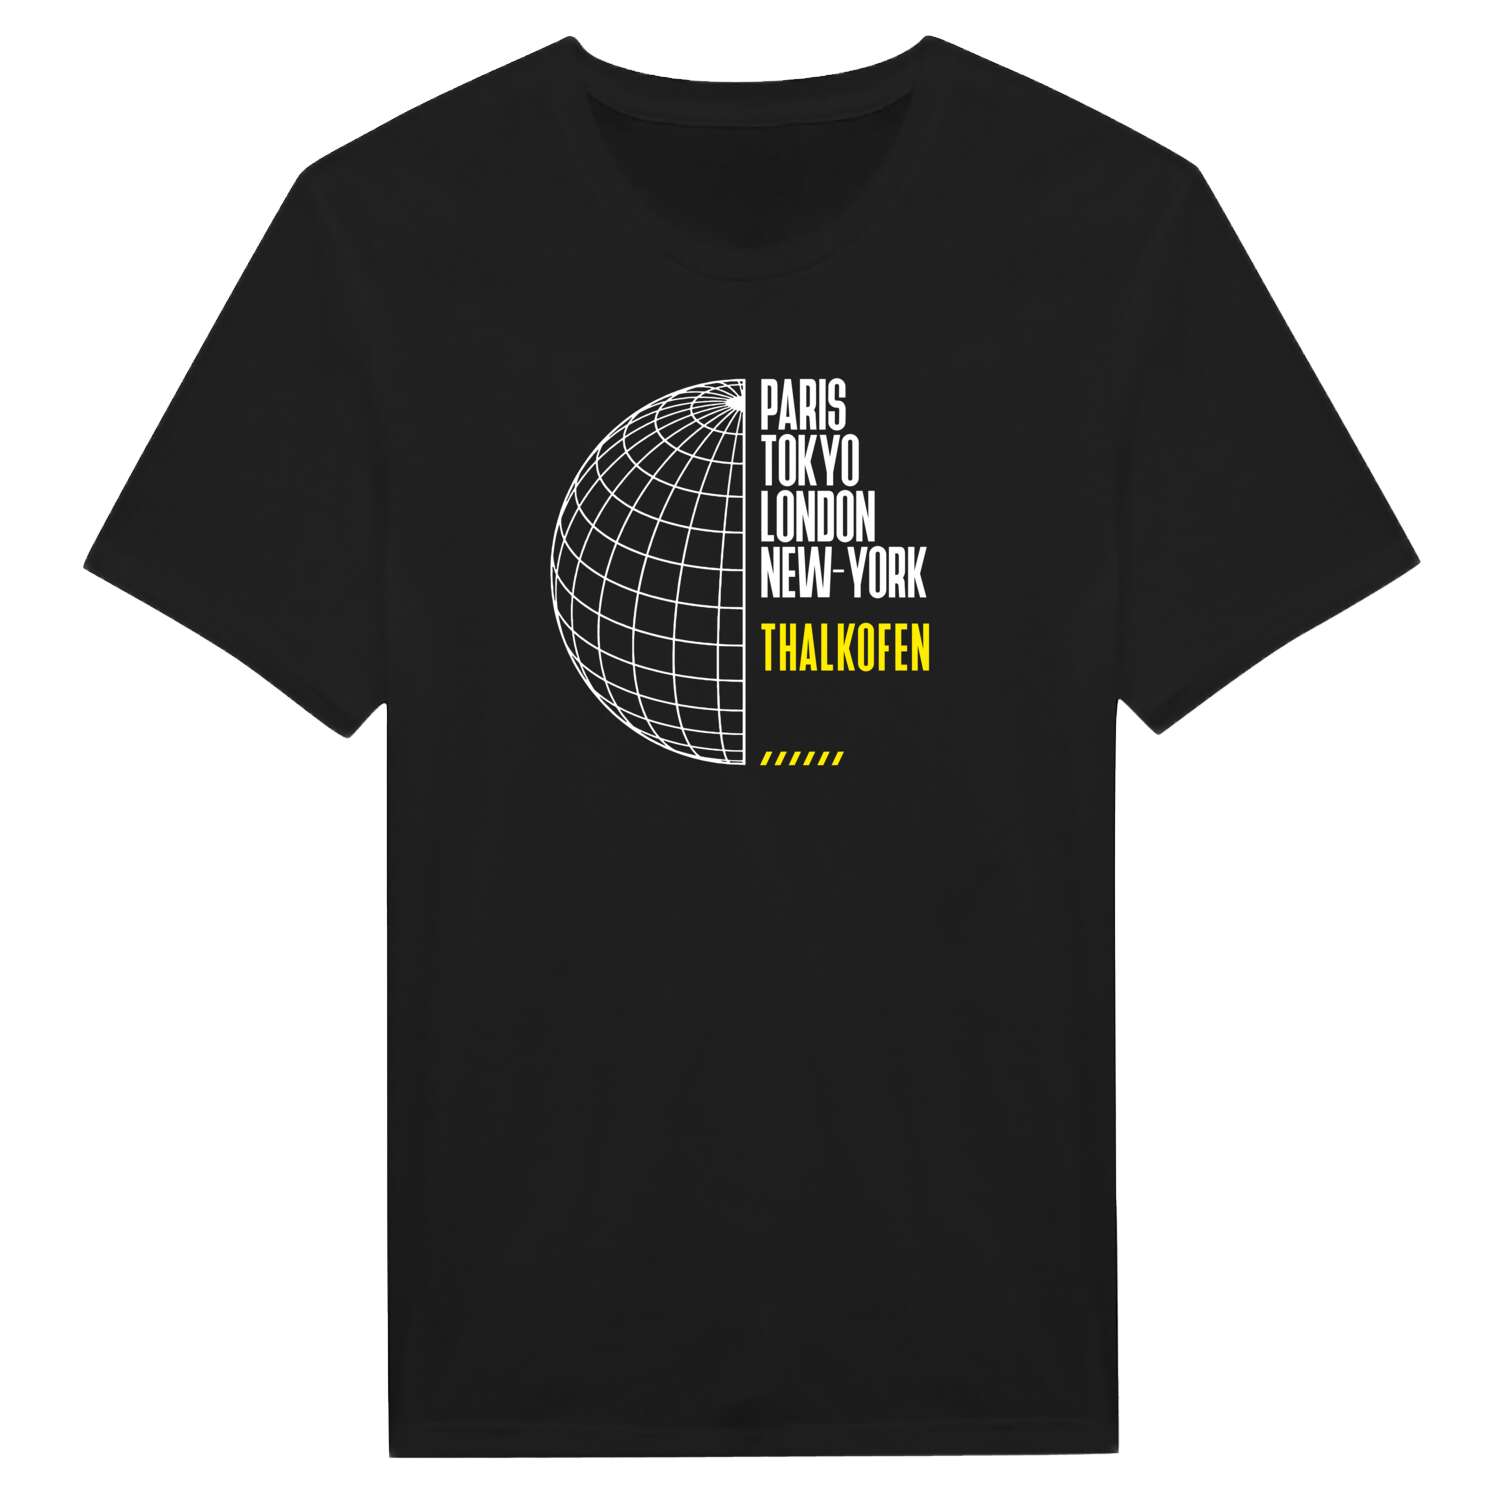 Thalkofen T-Shirt »Paris Tokyo London«